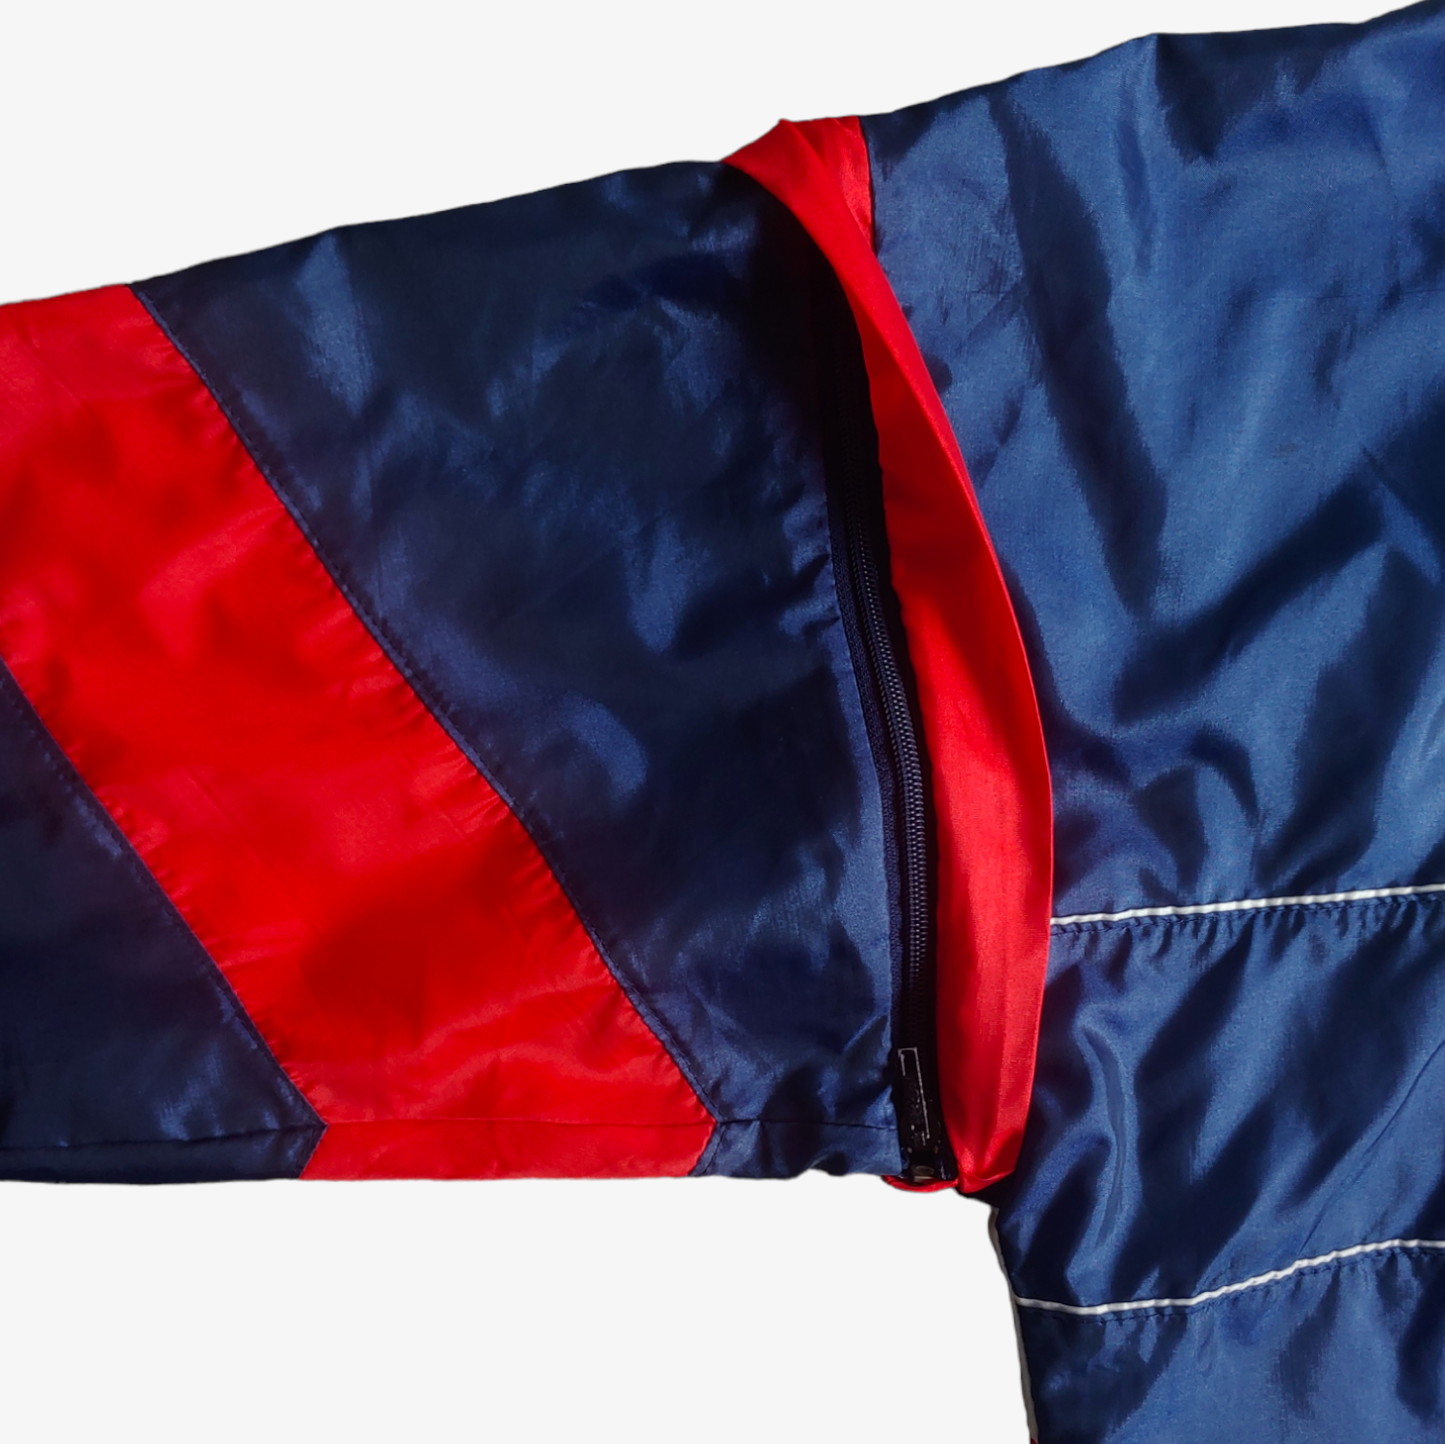 Vintage 90s Adidas England Colour Way Track Jacket Gilet - Casspios Dream